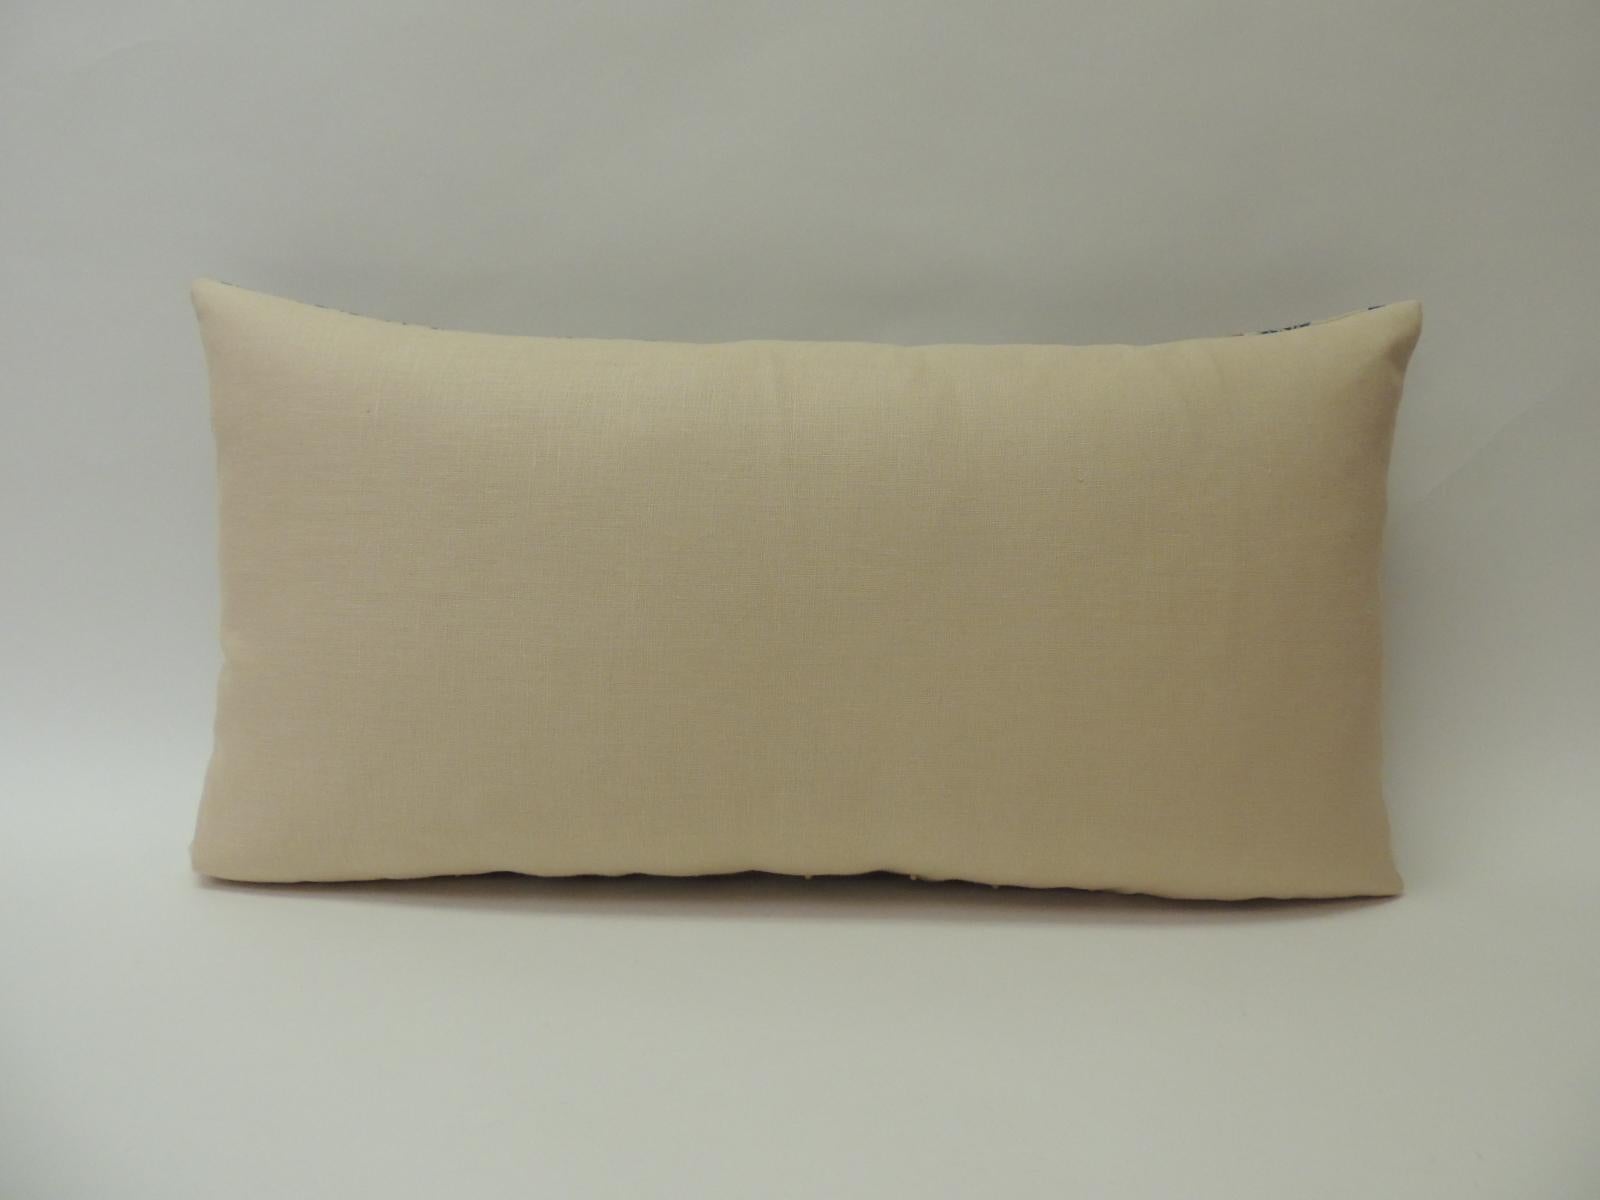 Moorish Vintage Indian Hand-Blocked Artisanal Textile Decorative Long Bolster Pillow